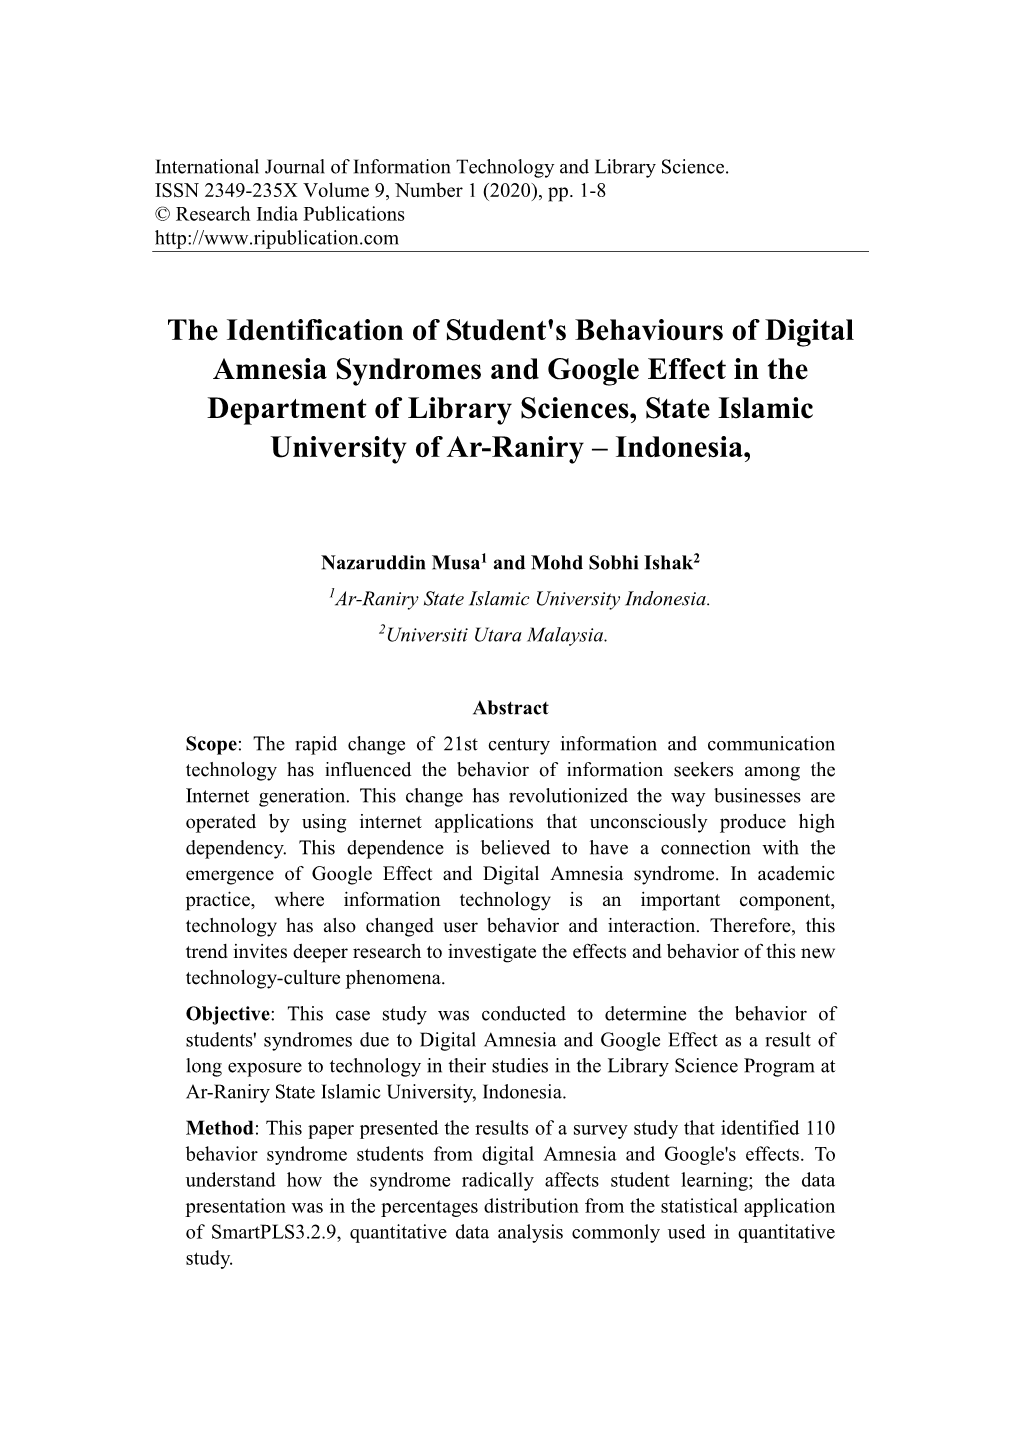 The Identification of Student's Behaviours of Digital Amnesia